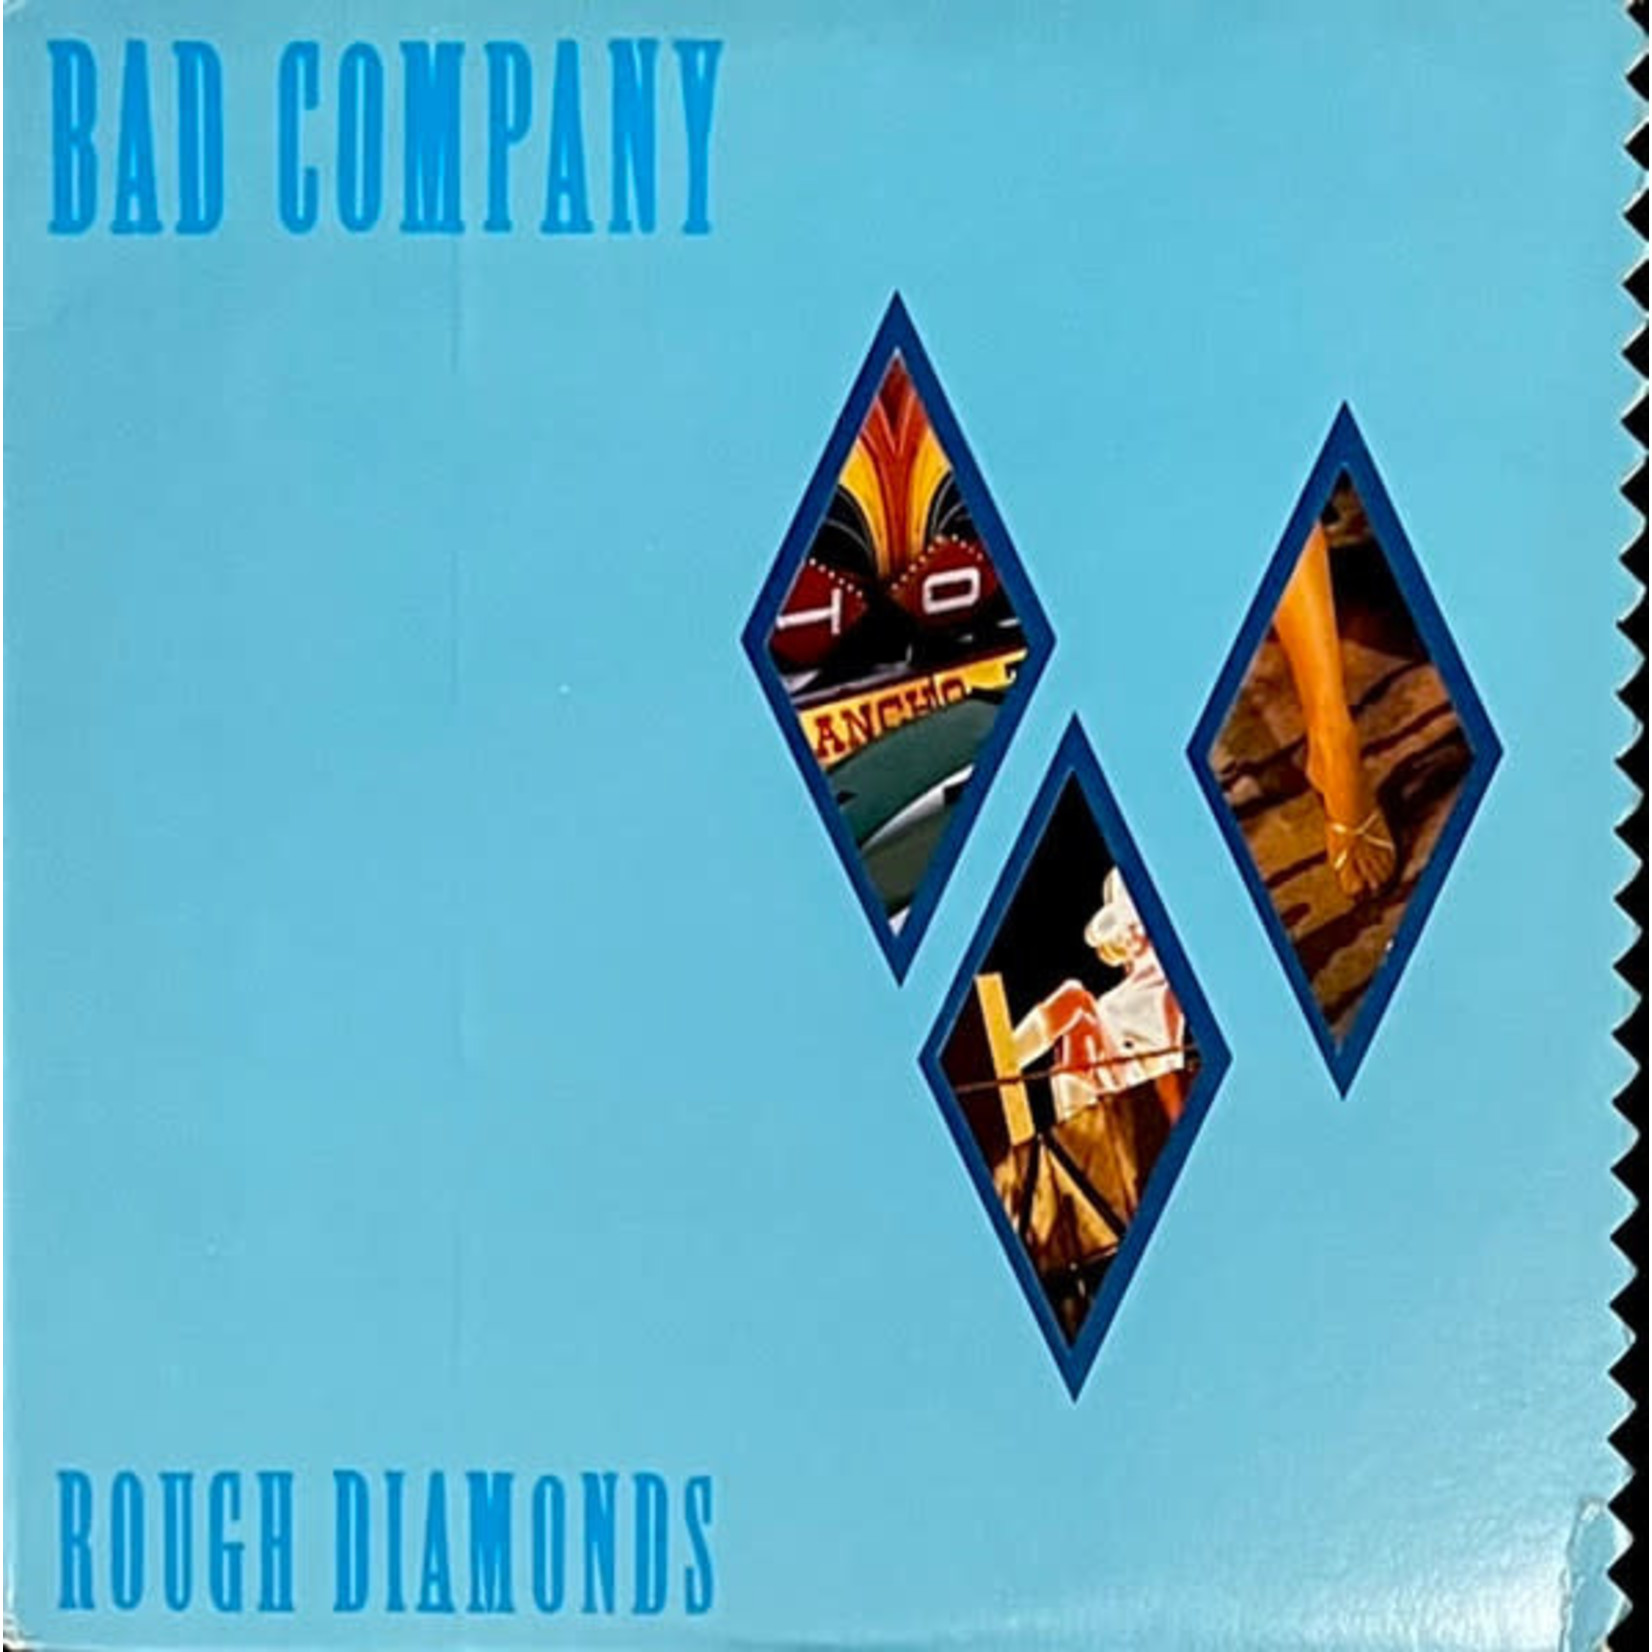 [Vintage] Bad Company - Rough Diamond